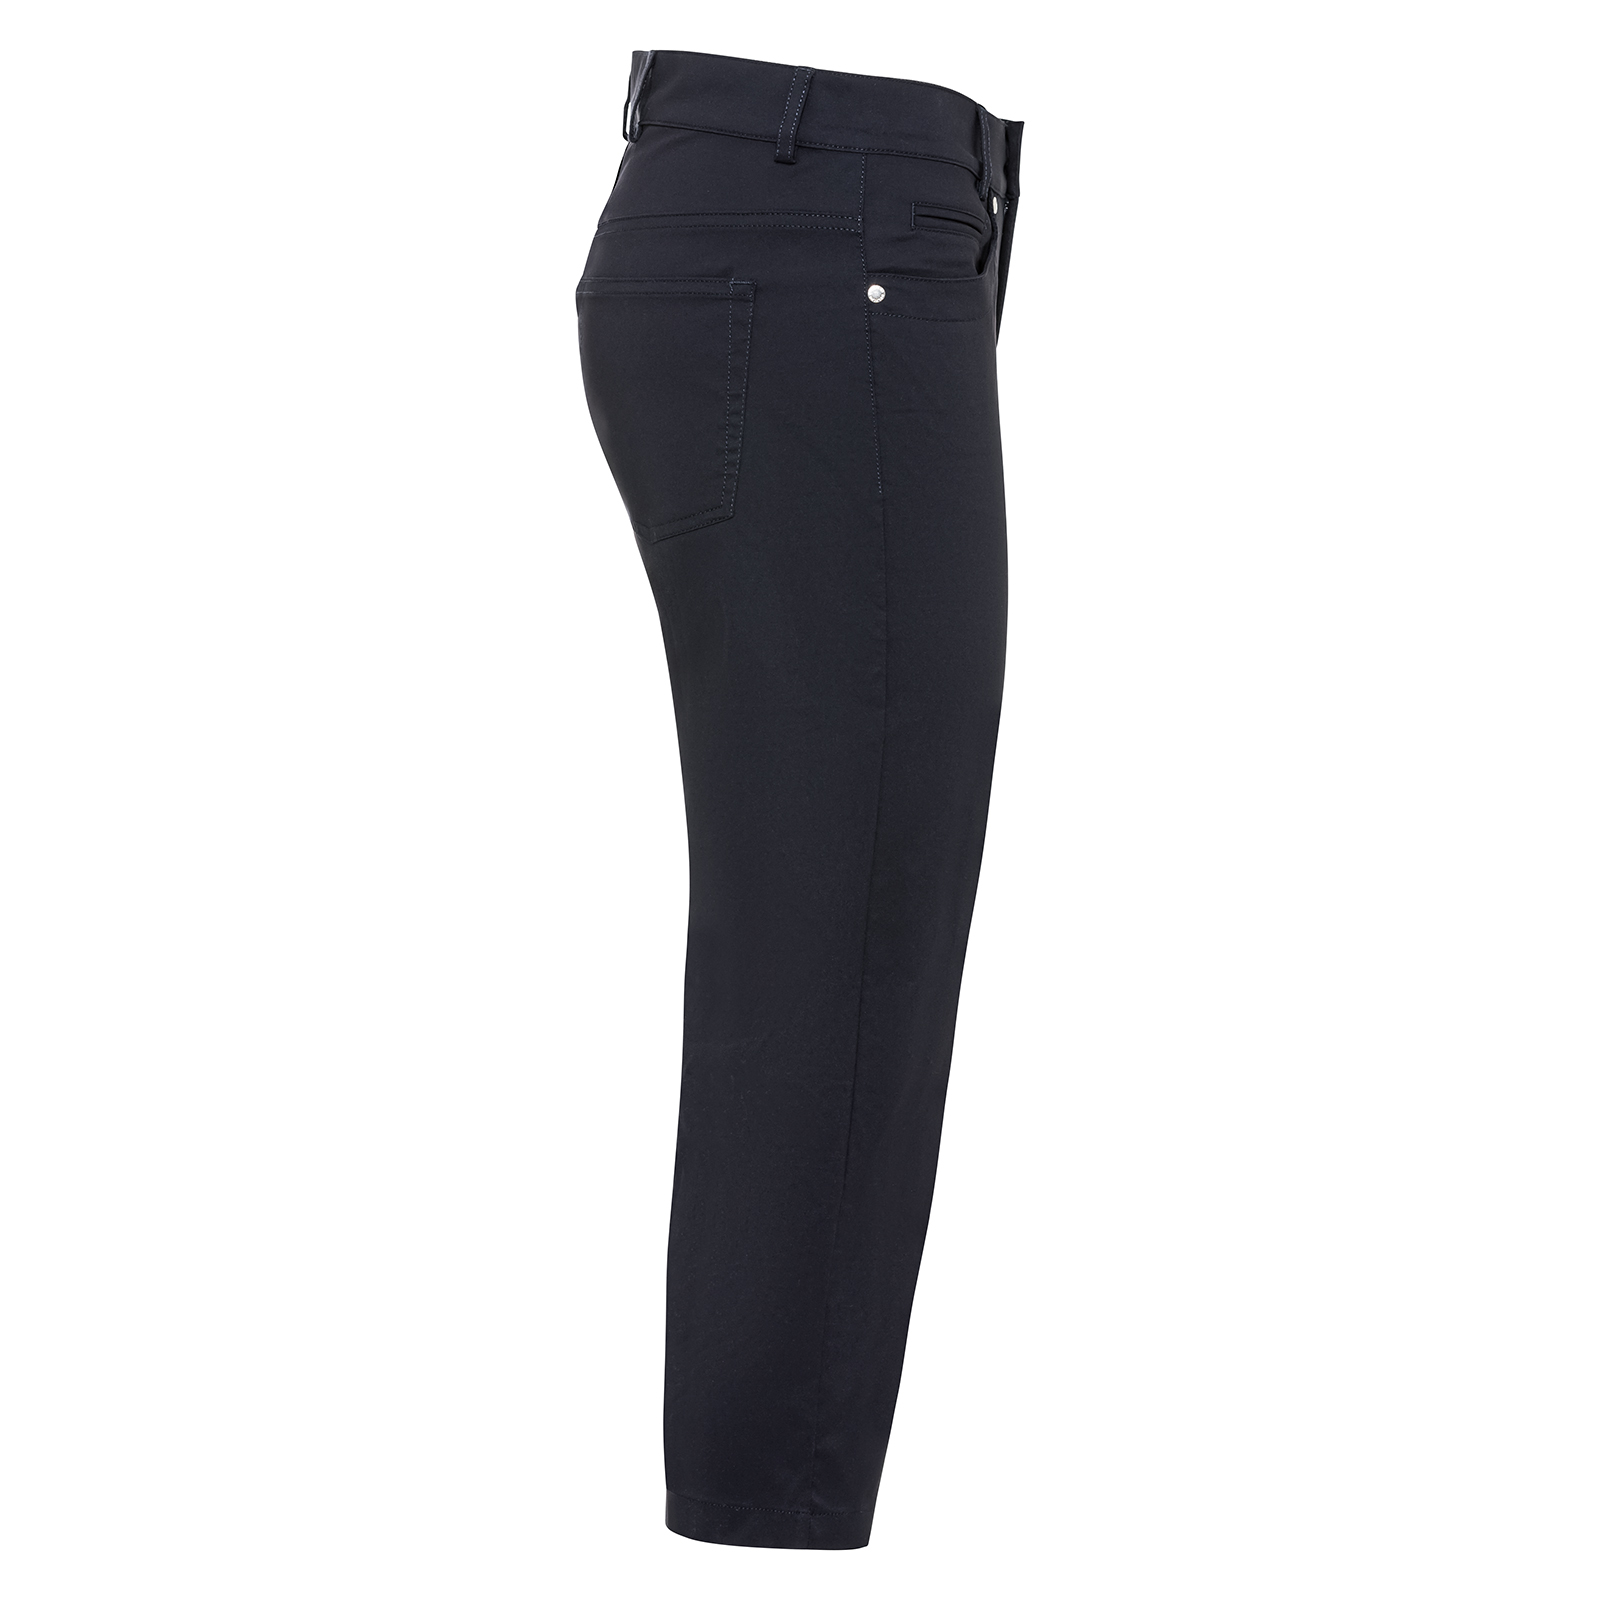 Ladies' 5-pocket capri-style golf trousers